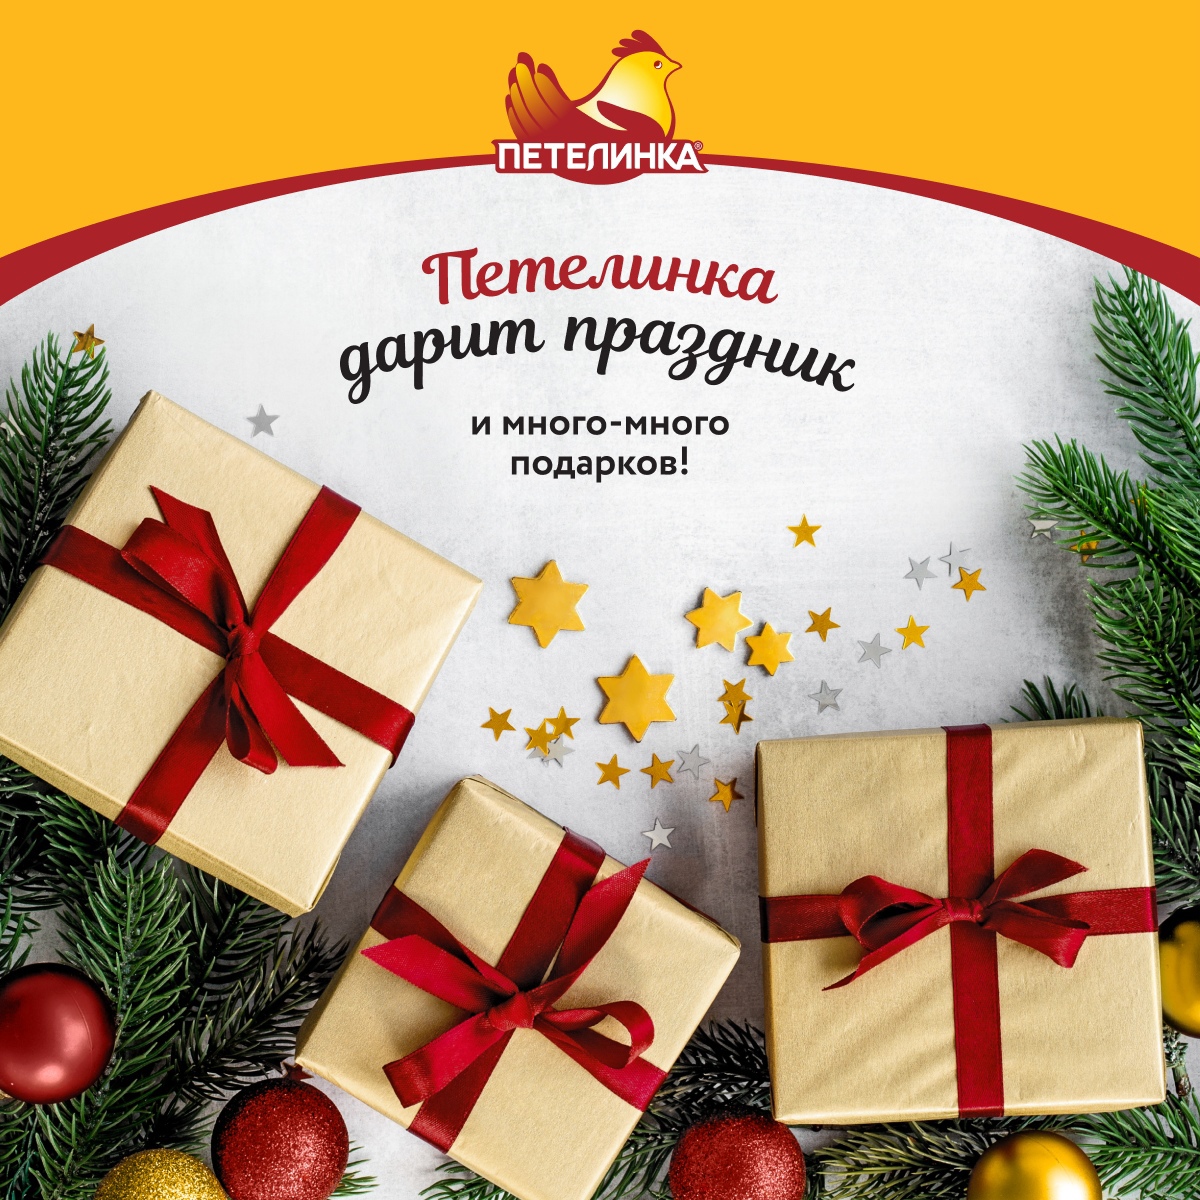 Промо-акция репостов Петелинка - "Петелинка дарит праздник"